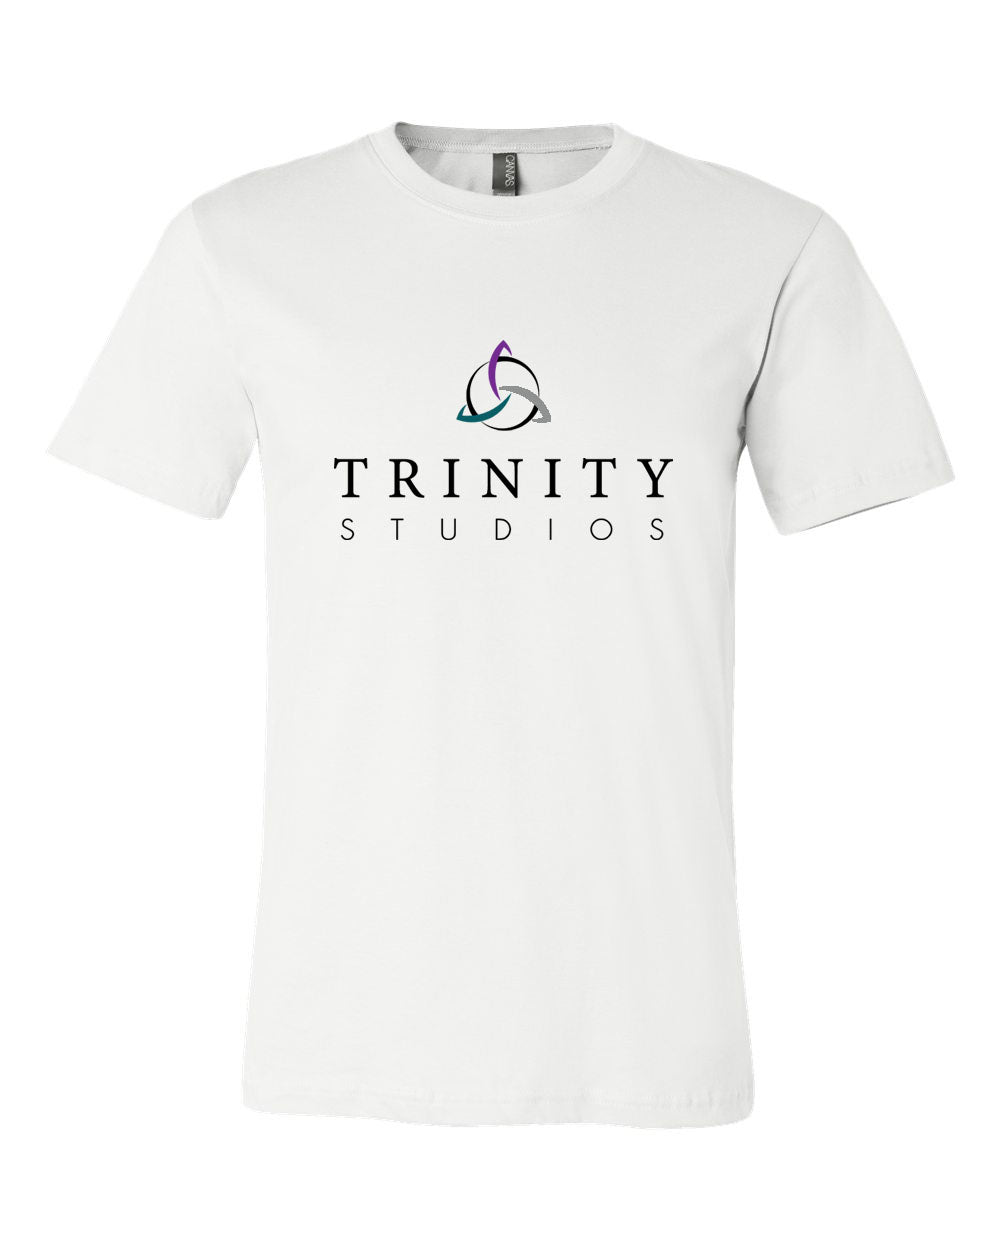 Trinity design 6 T-Shirt